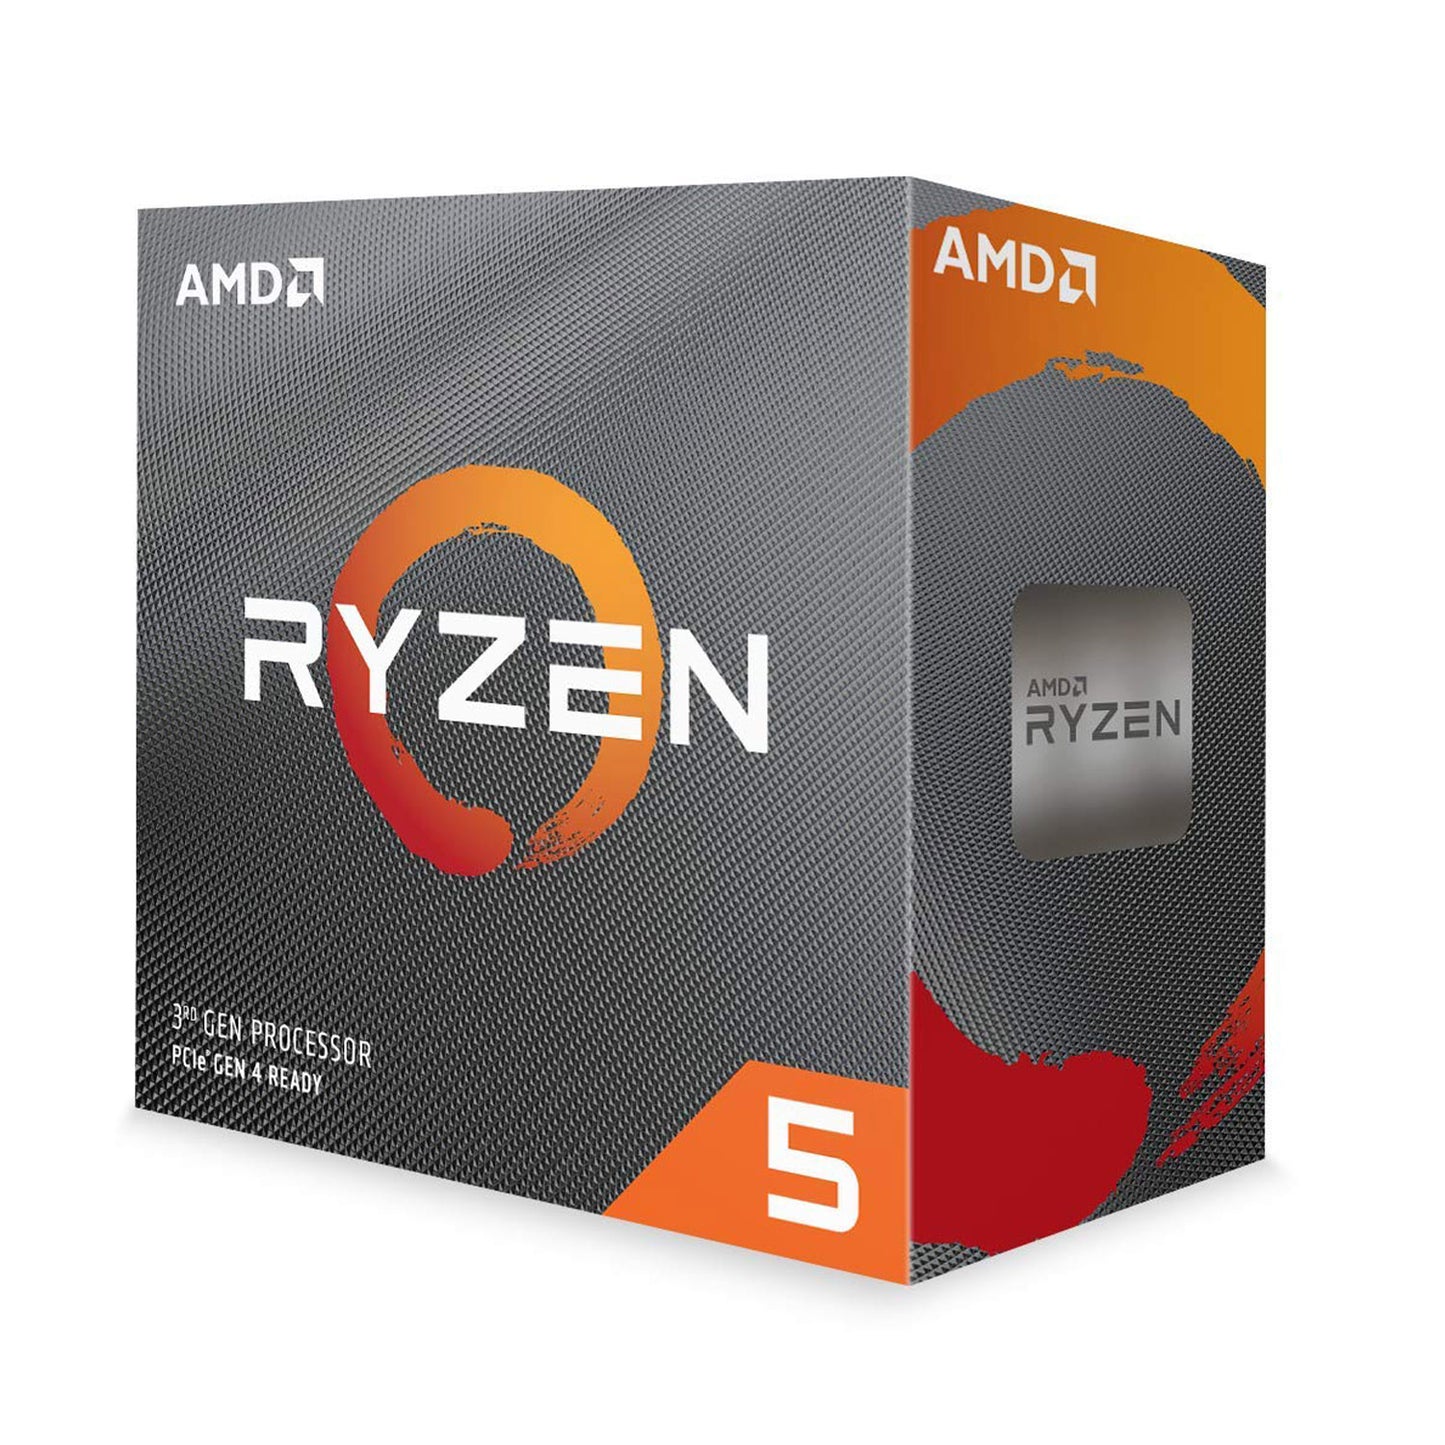 AMD Ryzen 5 3600 डेस्कटॉप प्रोसेसर 6 कोर 4.2GHz तक 35MB कैश AM4 सॉकेट